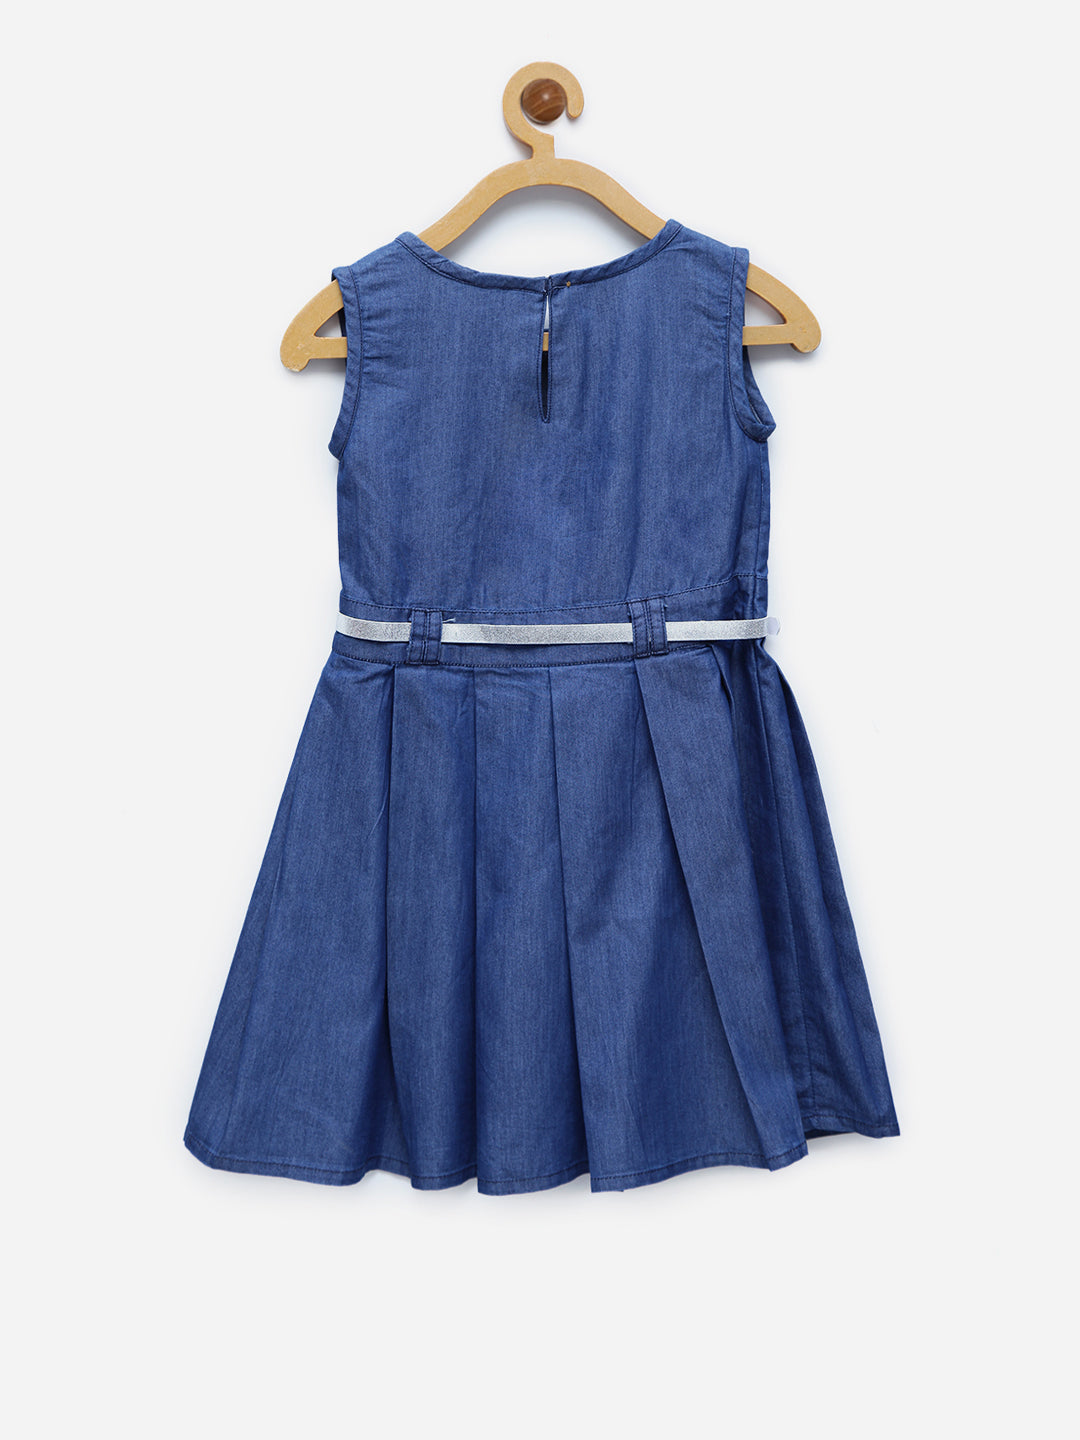 Girls Blue Denim Sailor Dress with Belt